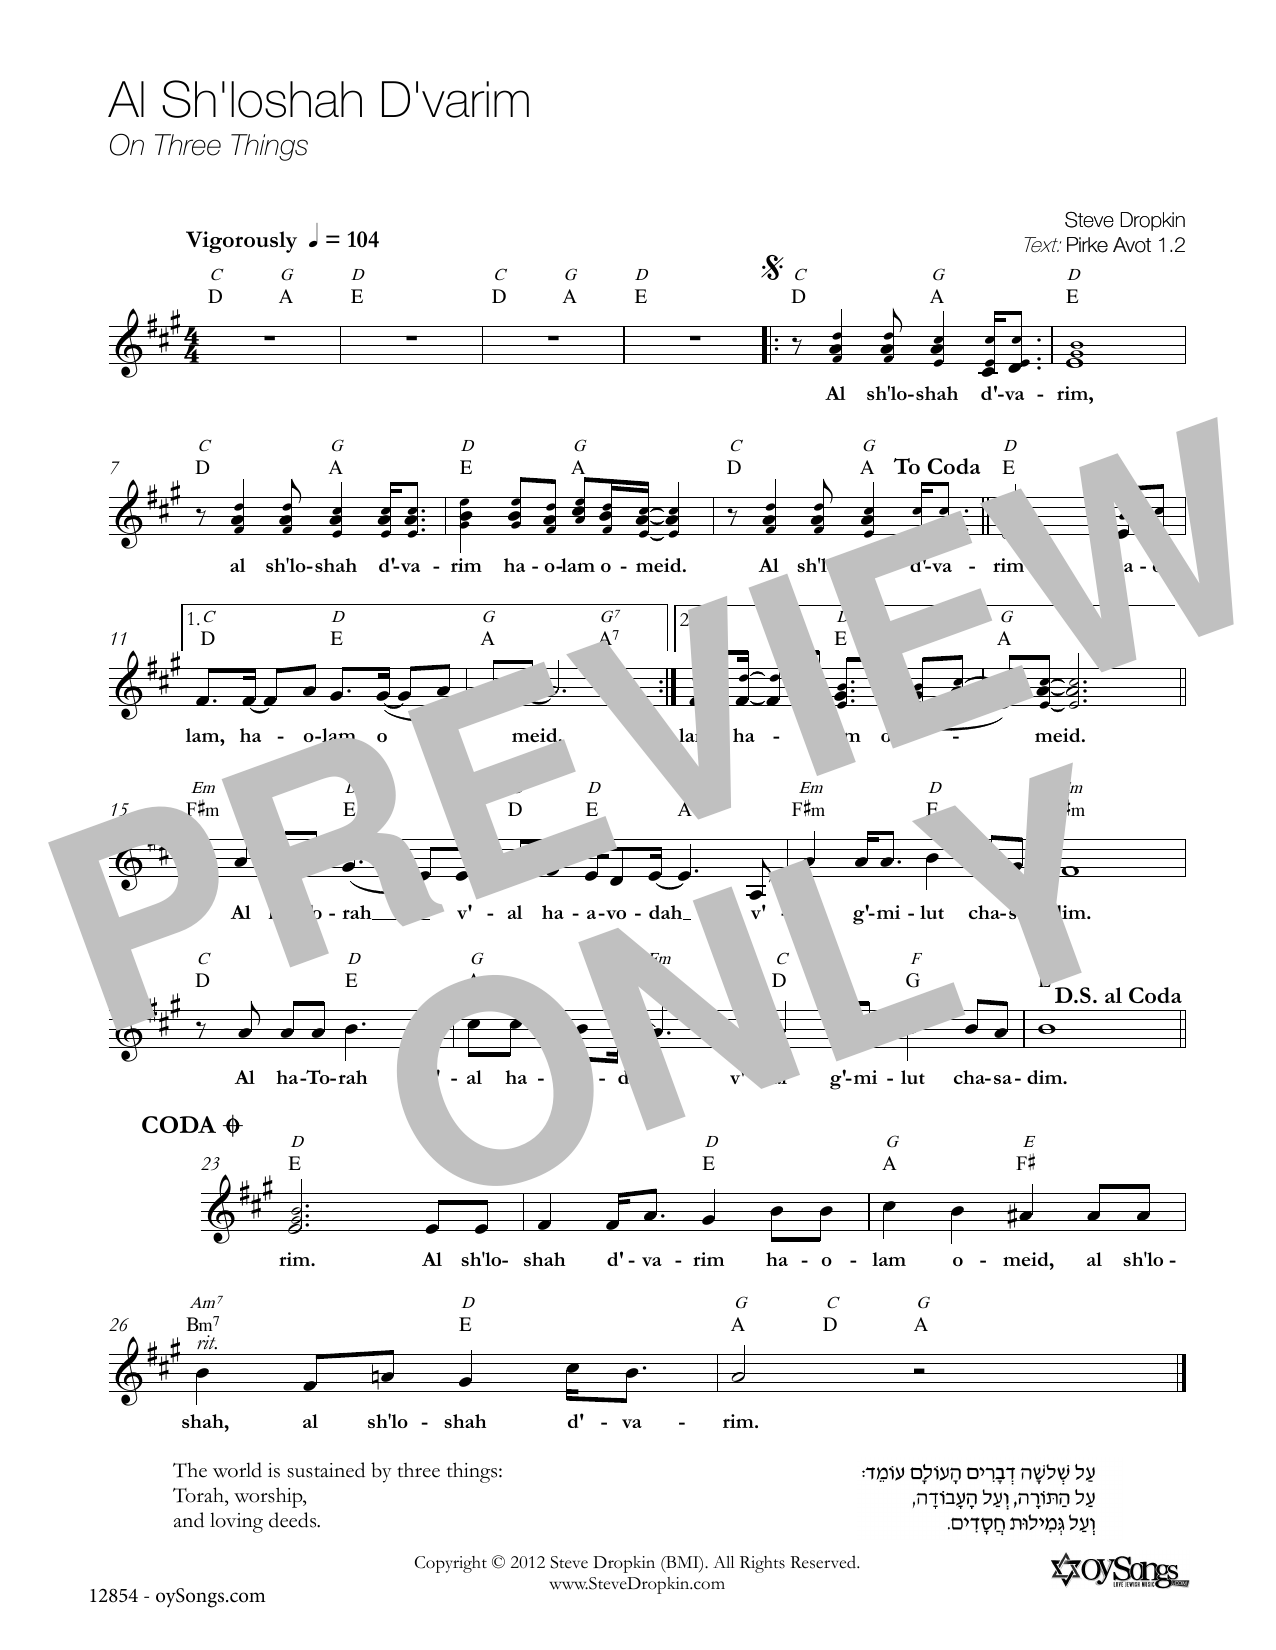 Download Steve Dropkin Al Shloshah D'varim Sheet Music and learn how to play Melody Line, Lyrics & Chords PDF digital score in minutes